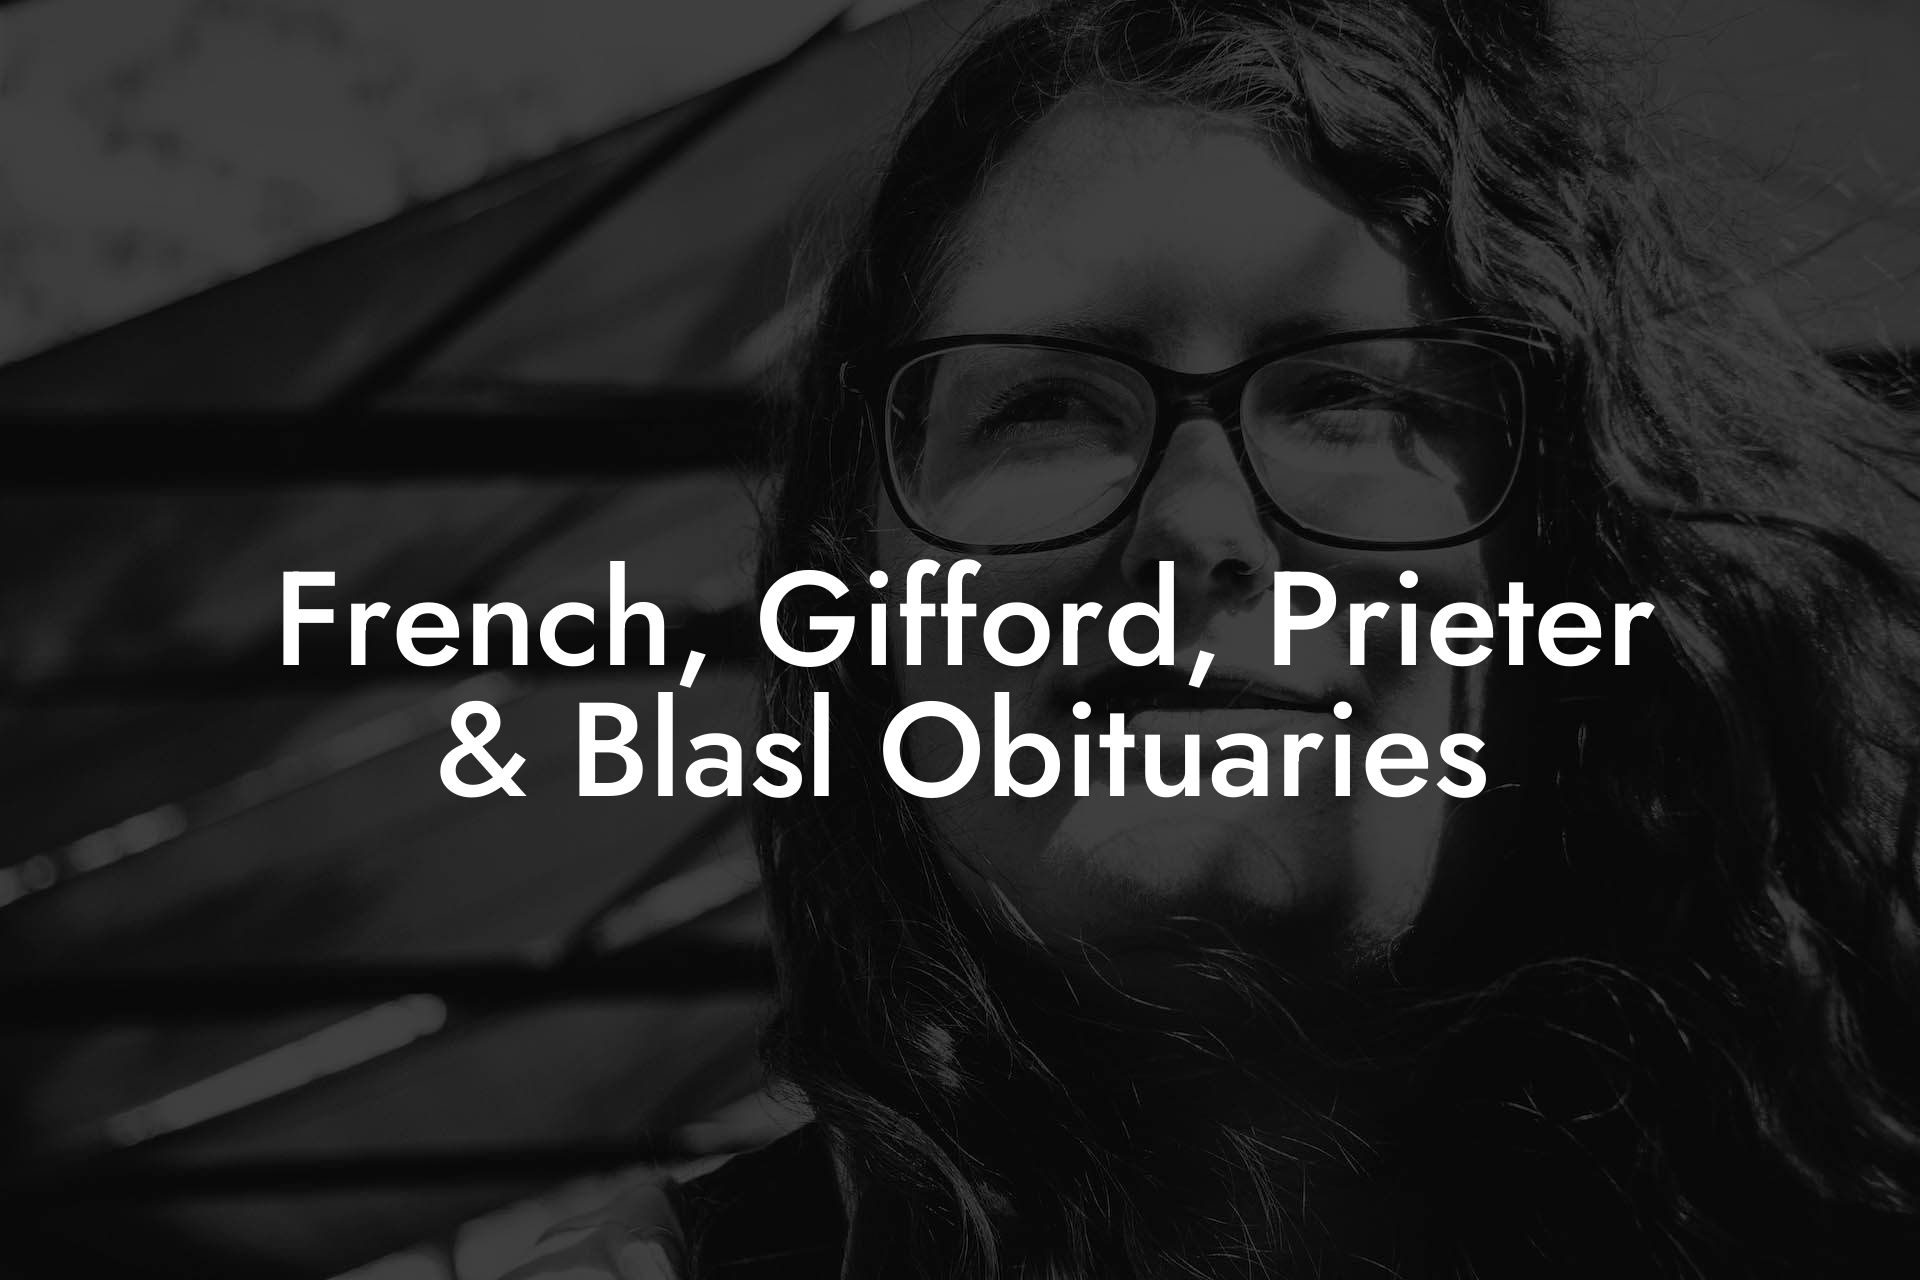 French, Gifford, Prieter & Blasl Obituaries